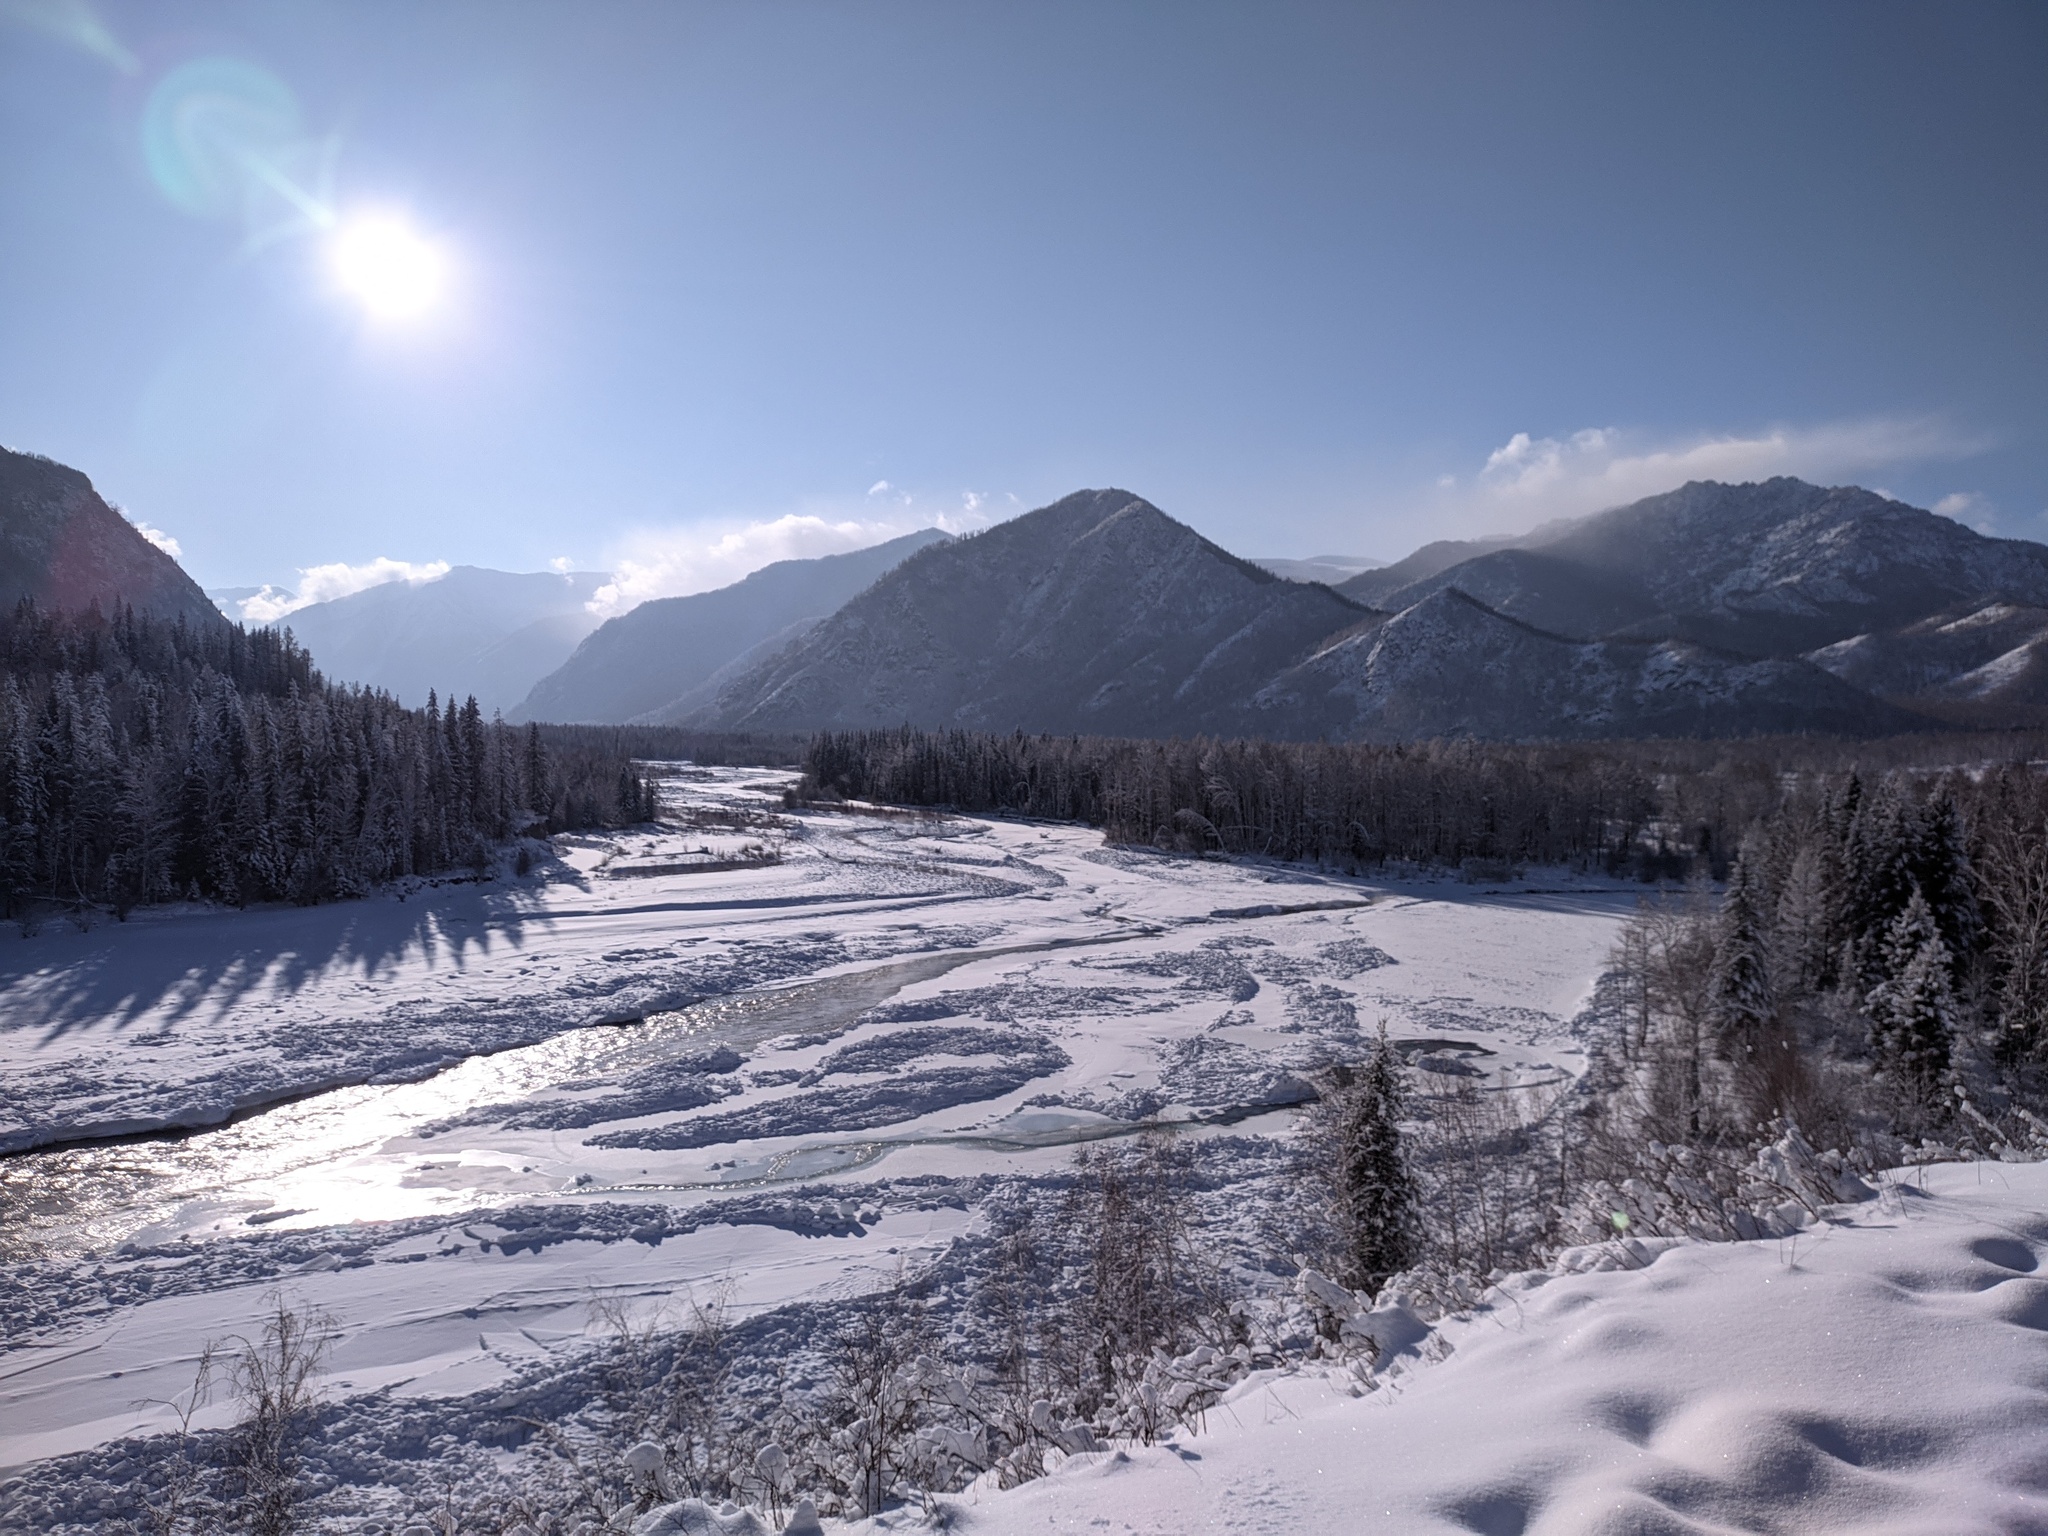 Winter season open - My, Altai Republic, Bike ride, The mountains, Katun, Winter, Soundless, Longpost